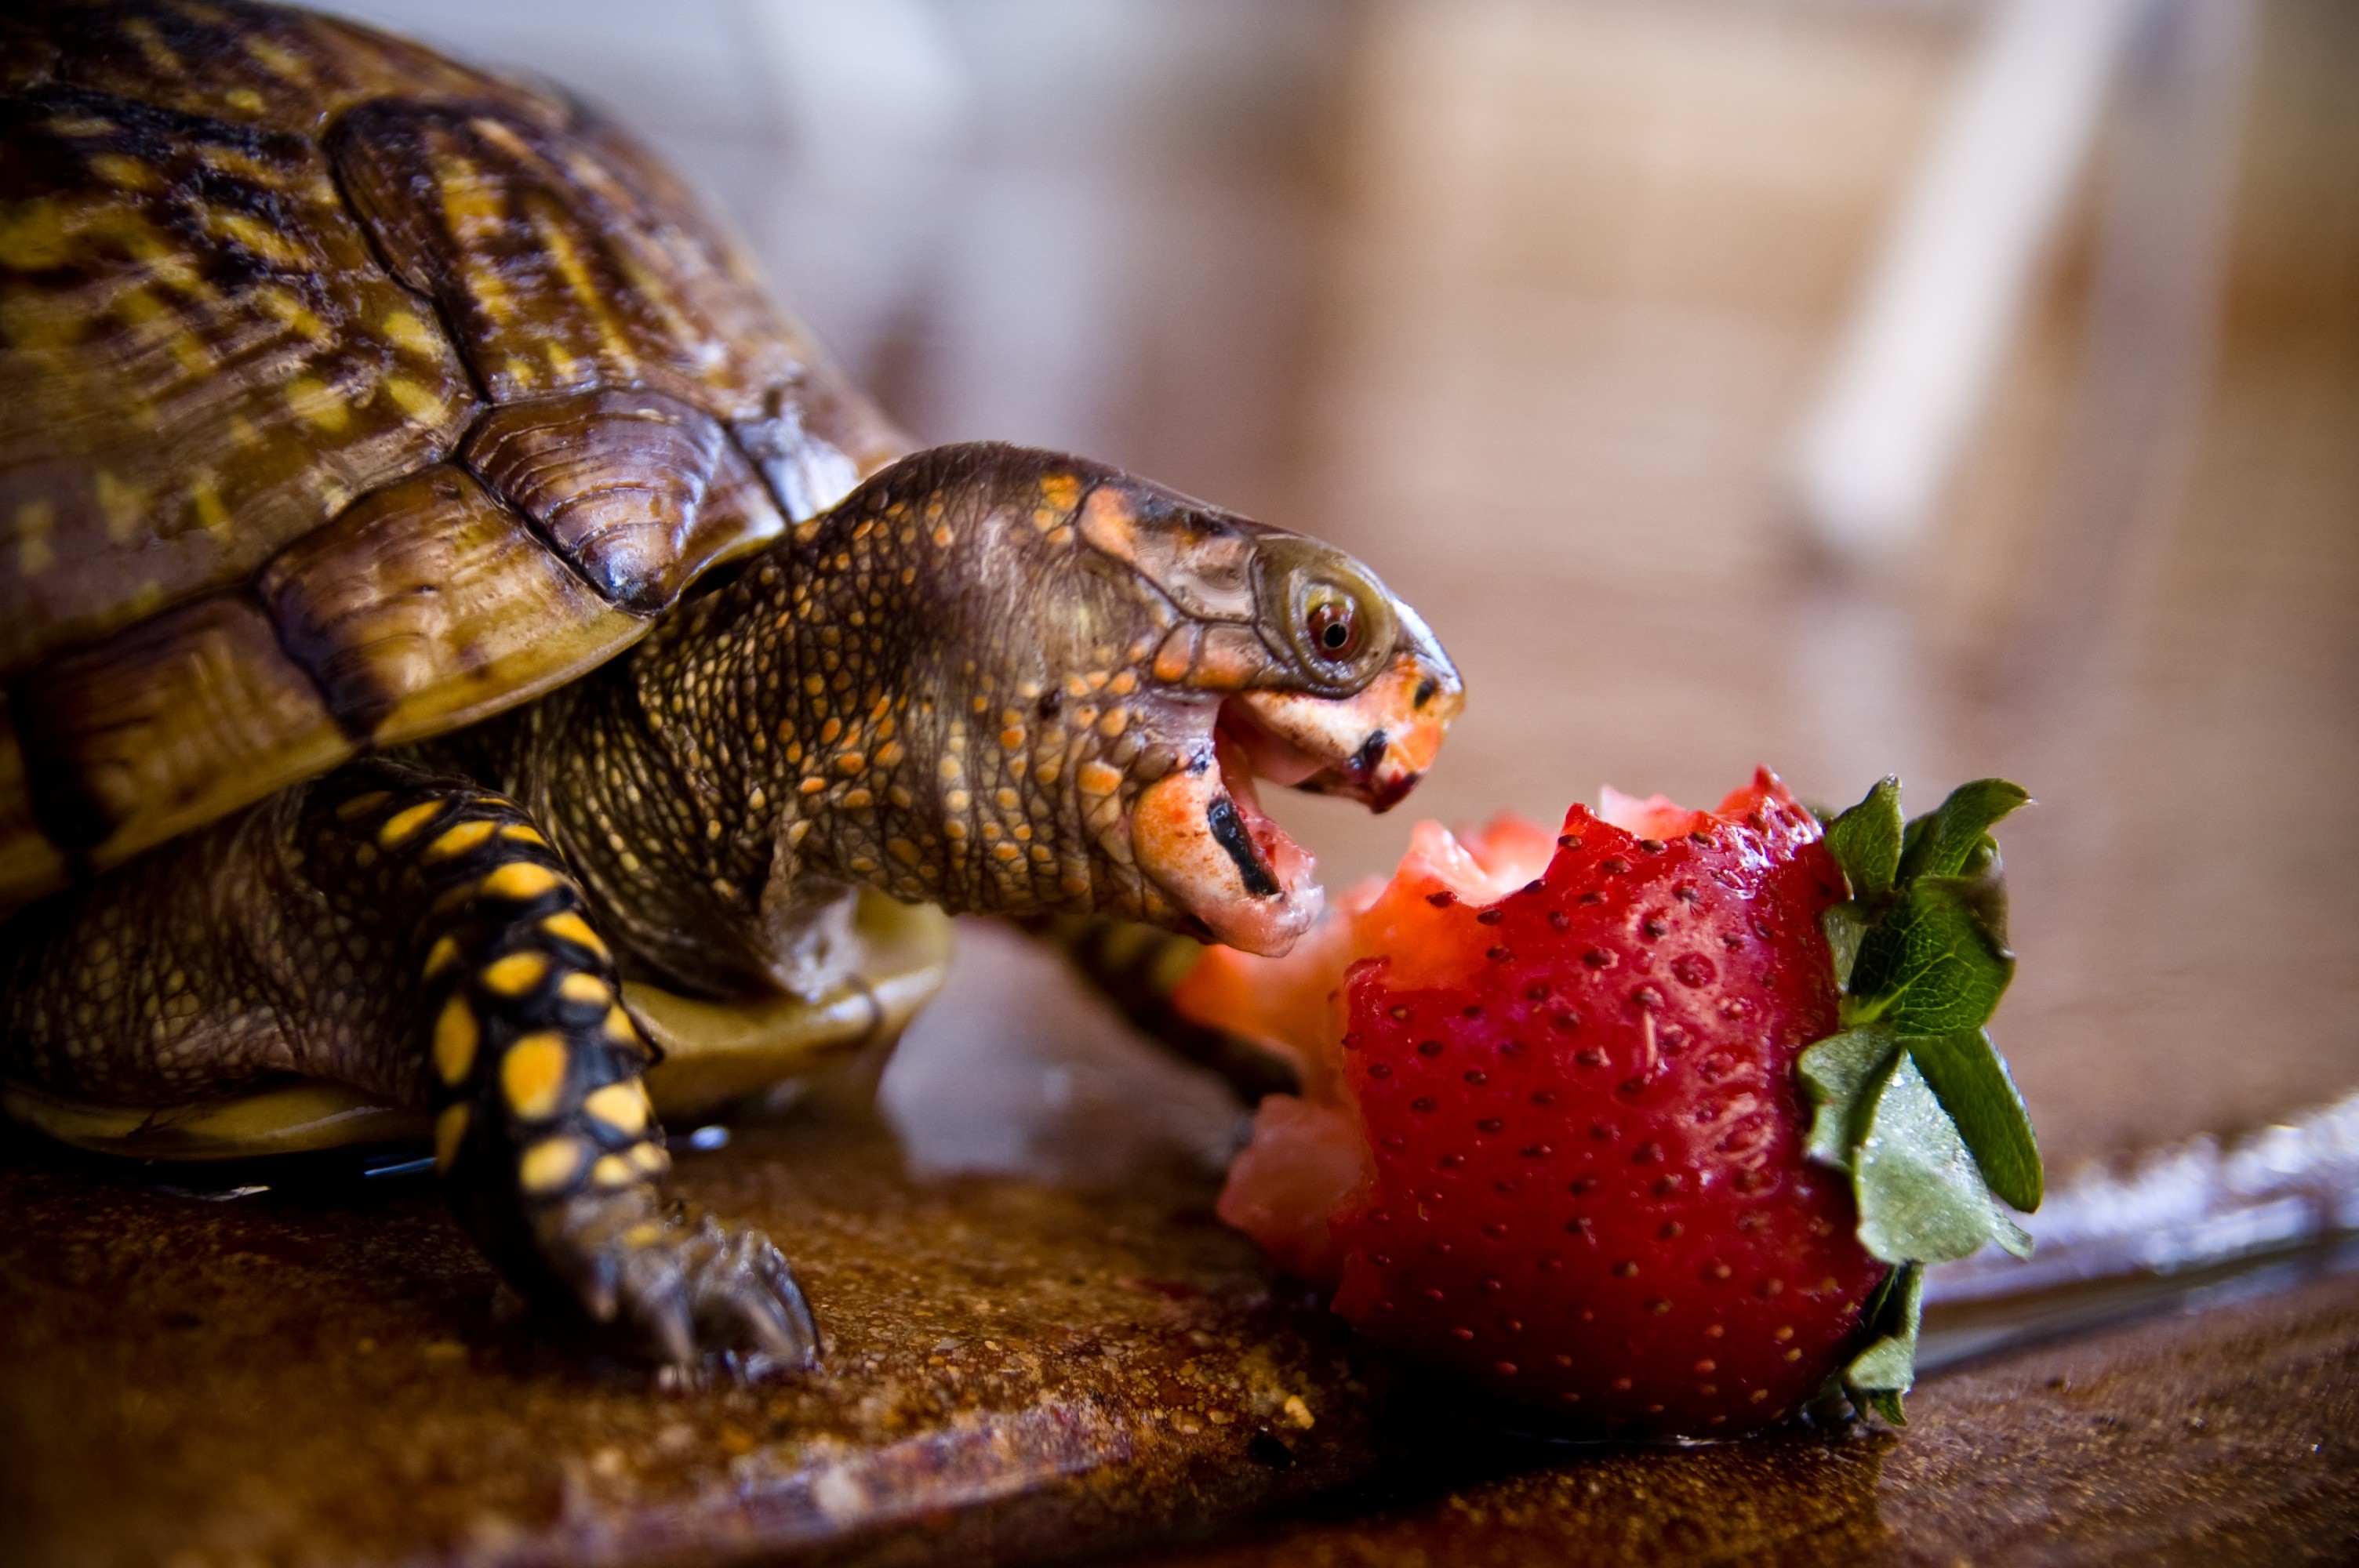 General 3008x2000 strawberries animals reptiles tortoises closeup eating food berries turtle fruit